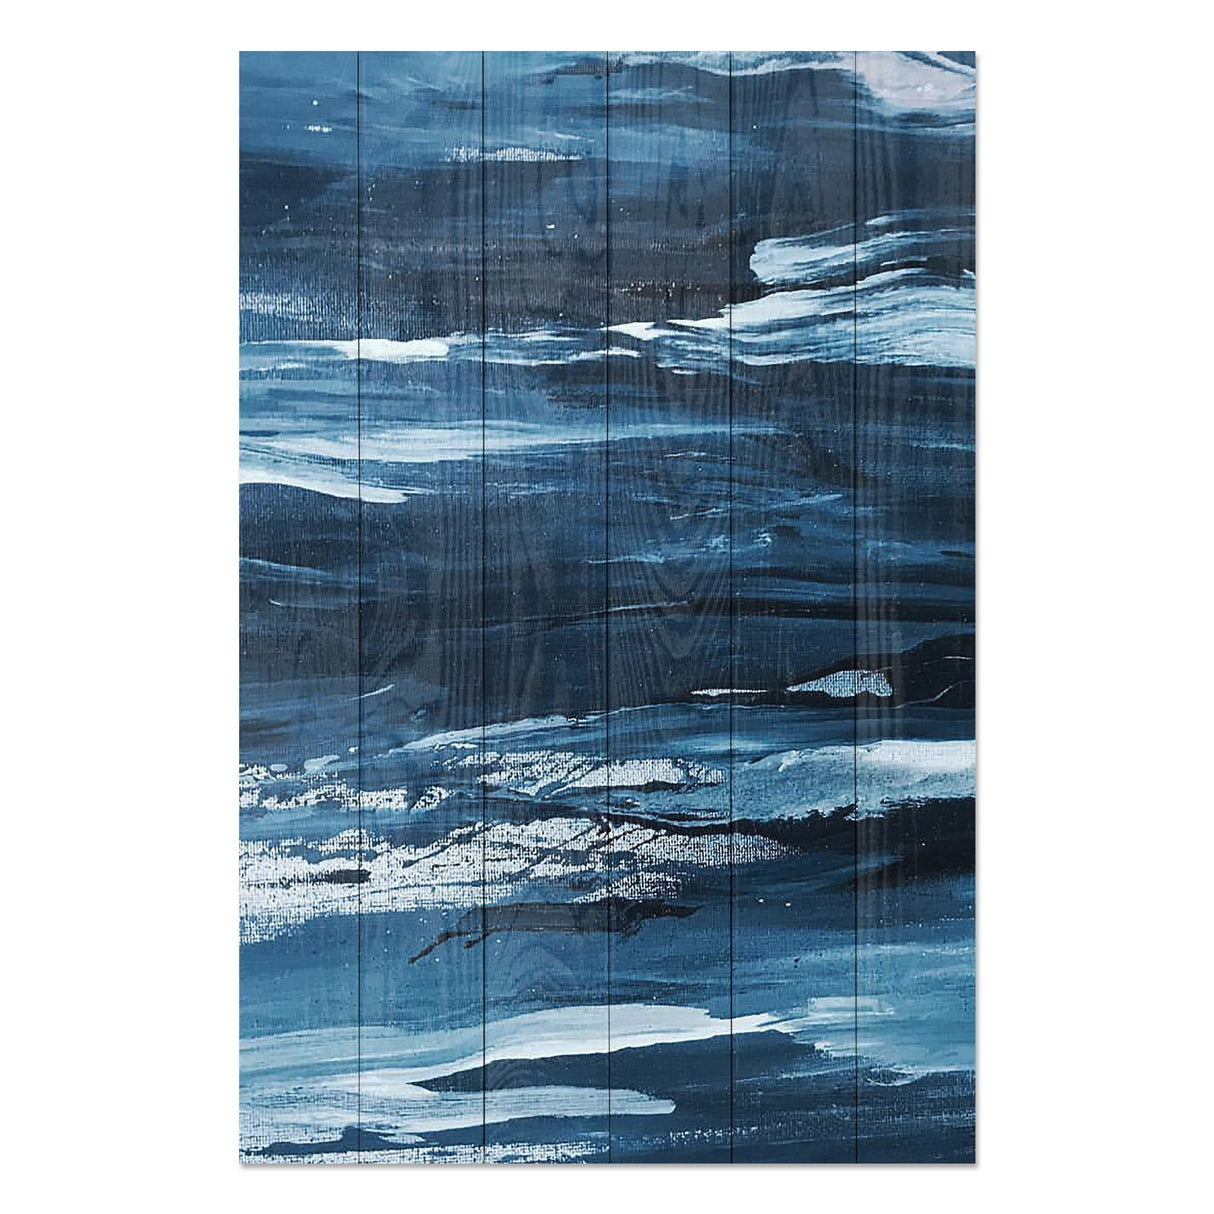 Obraz na drewnie Tafla wody - Rough Sea